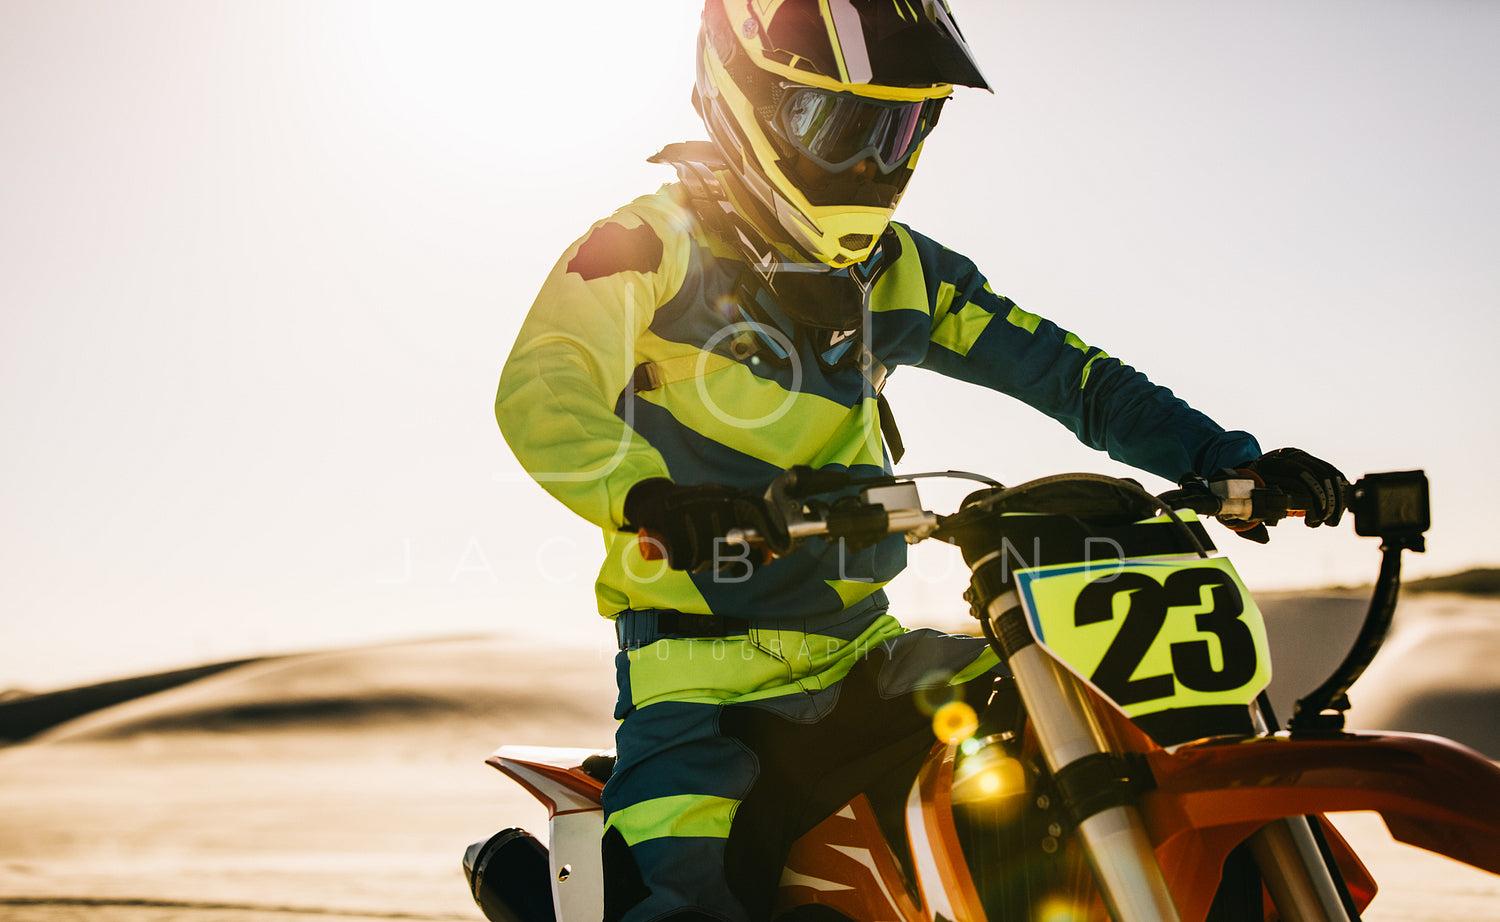 Motocross Biker In Racing Gear On His Bike During A Race Jacob